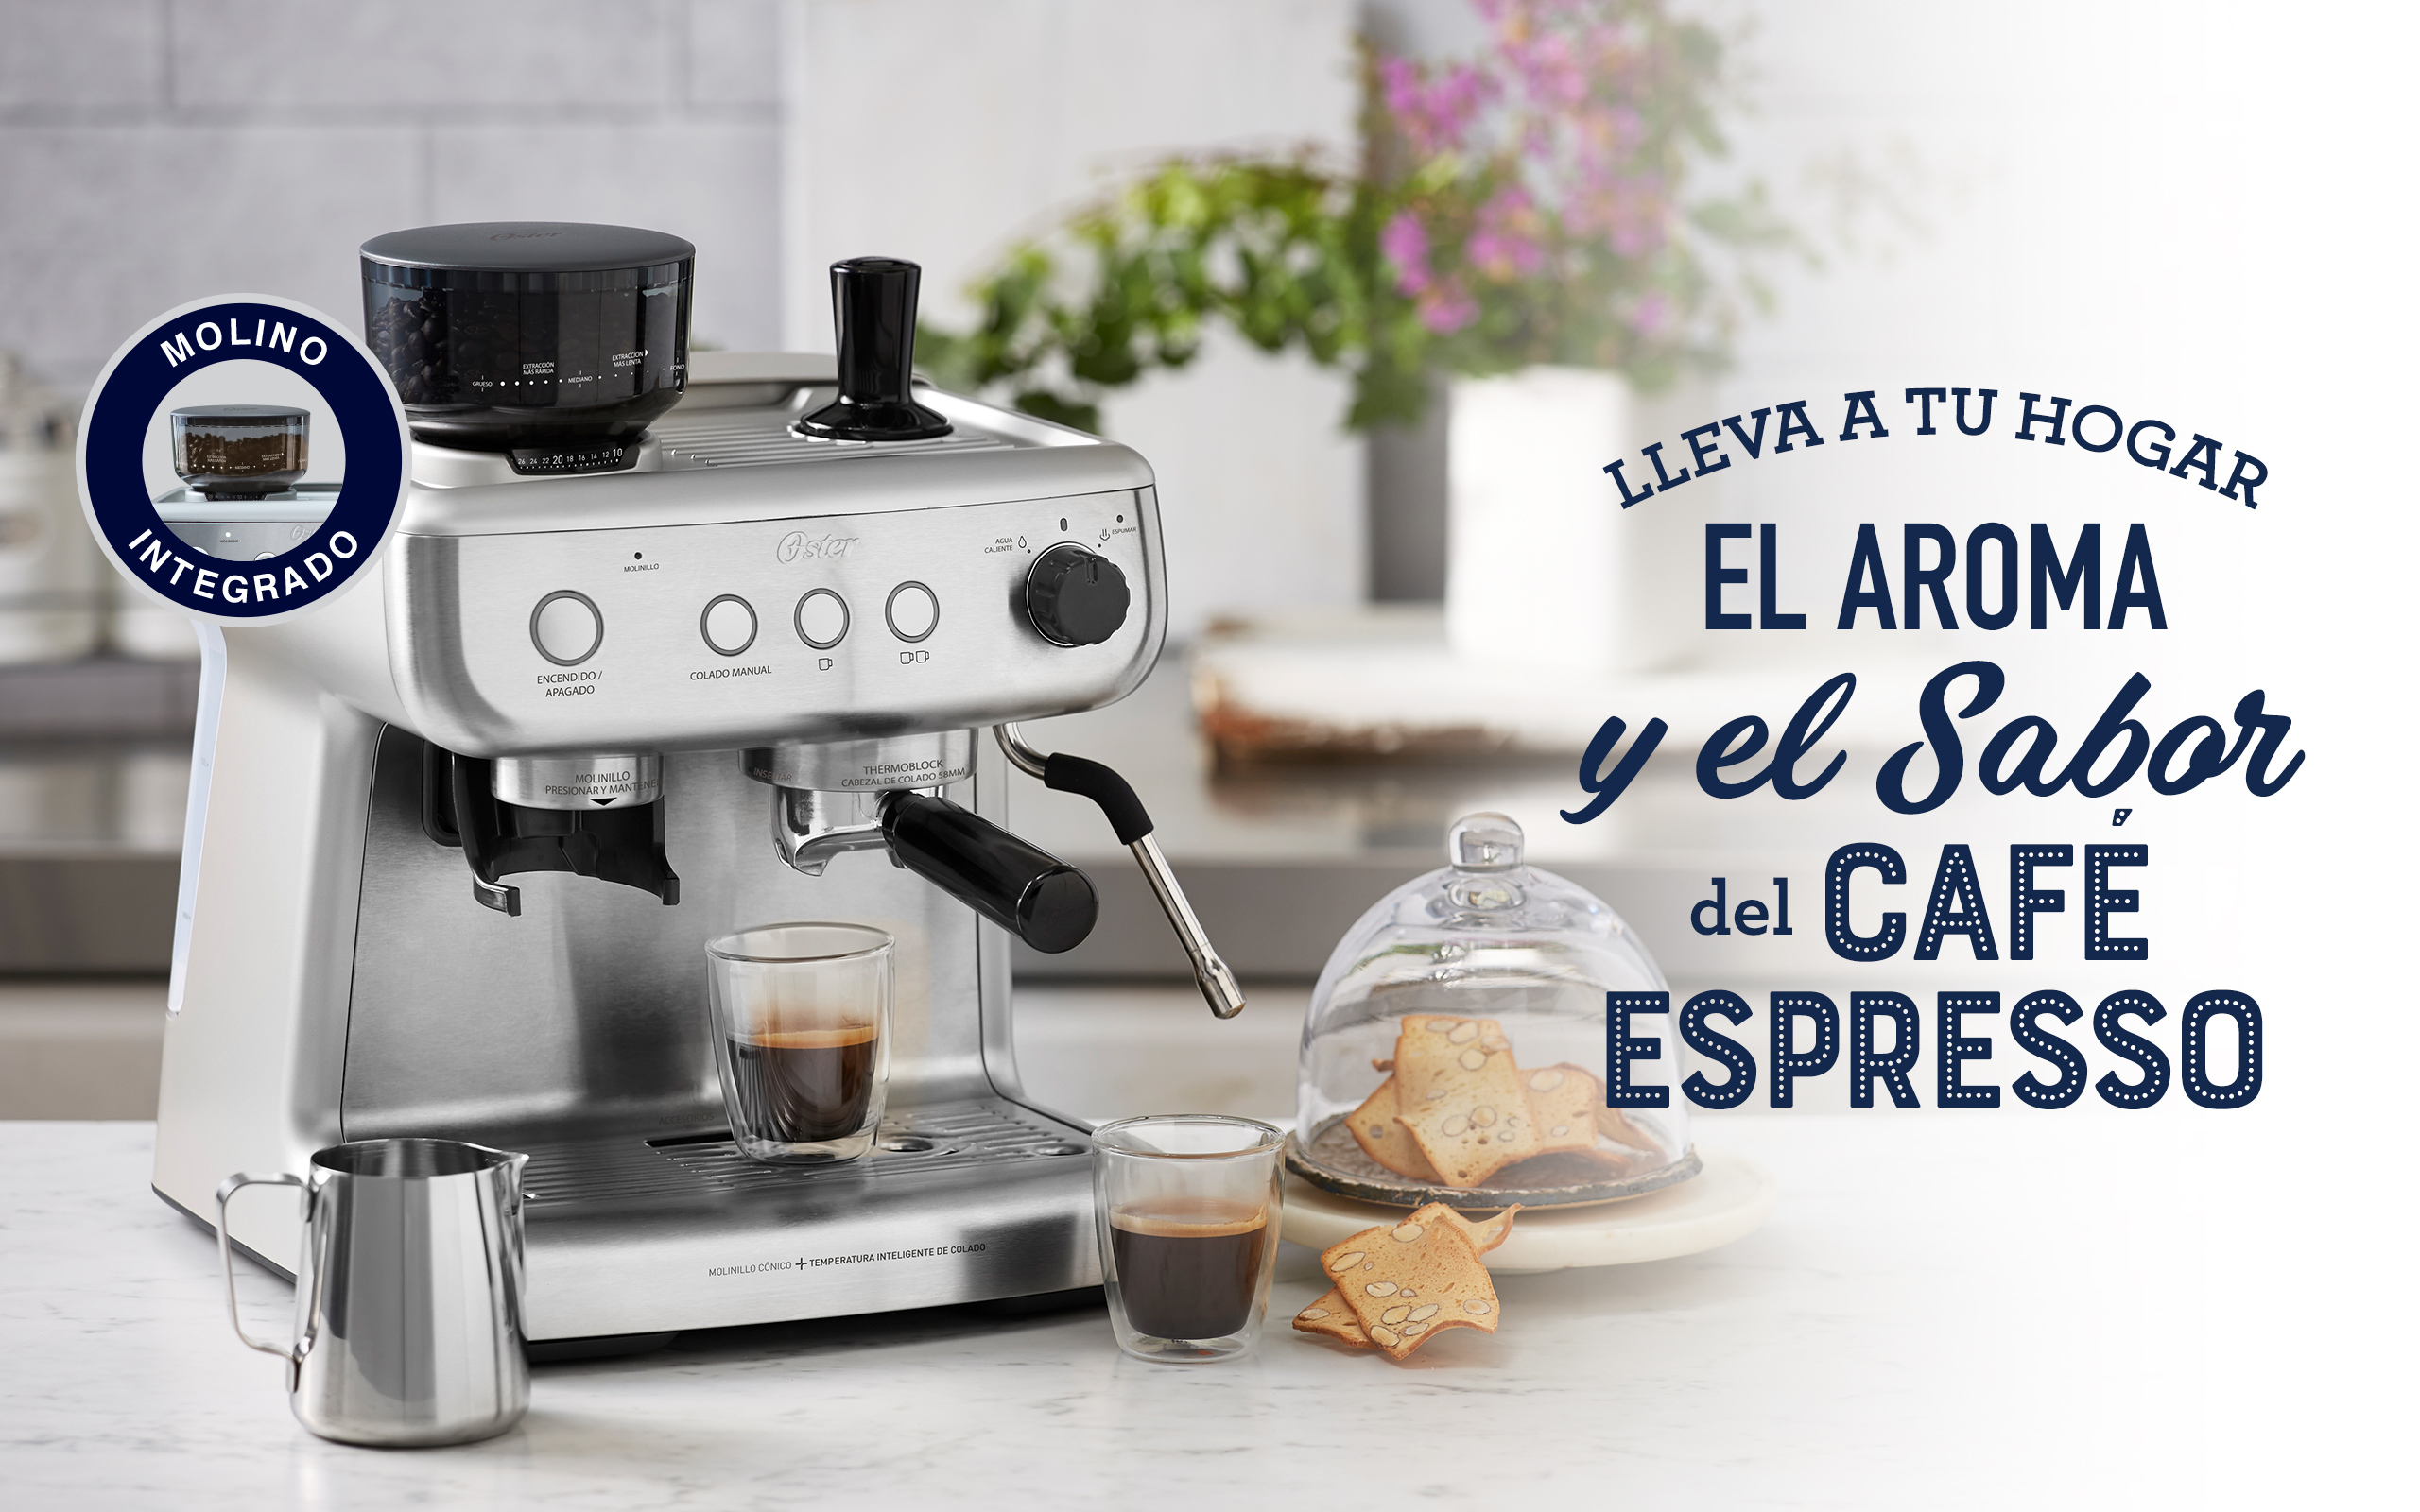 Cafetera Espresso Perfect Brew Molino Integrado BVSTEM7300